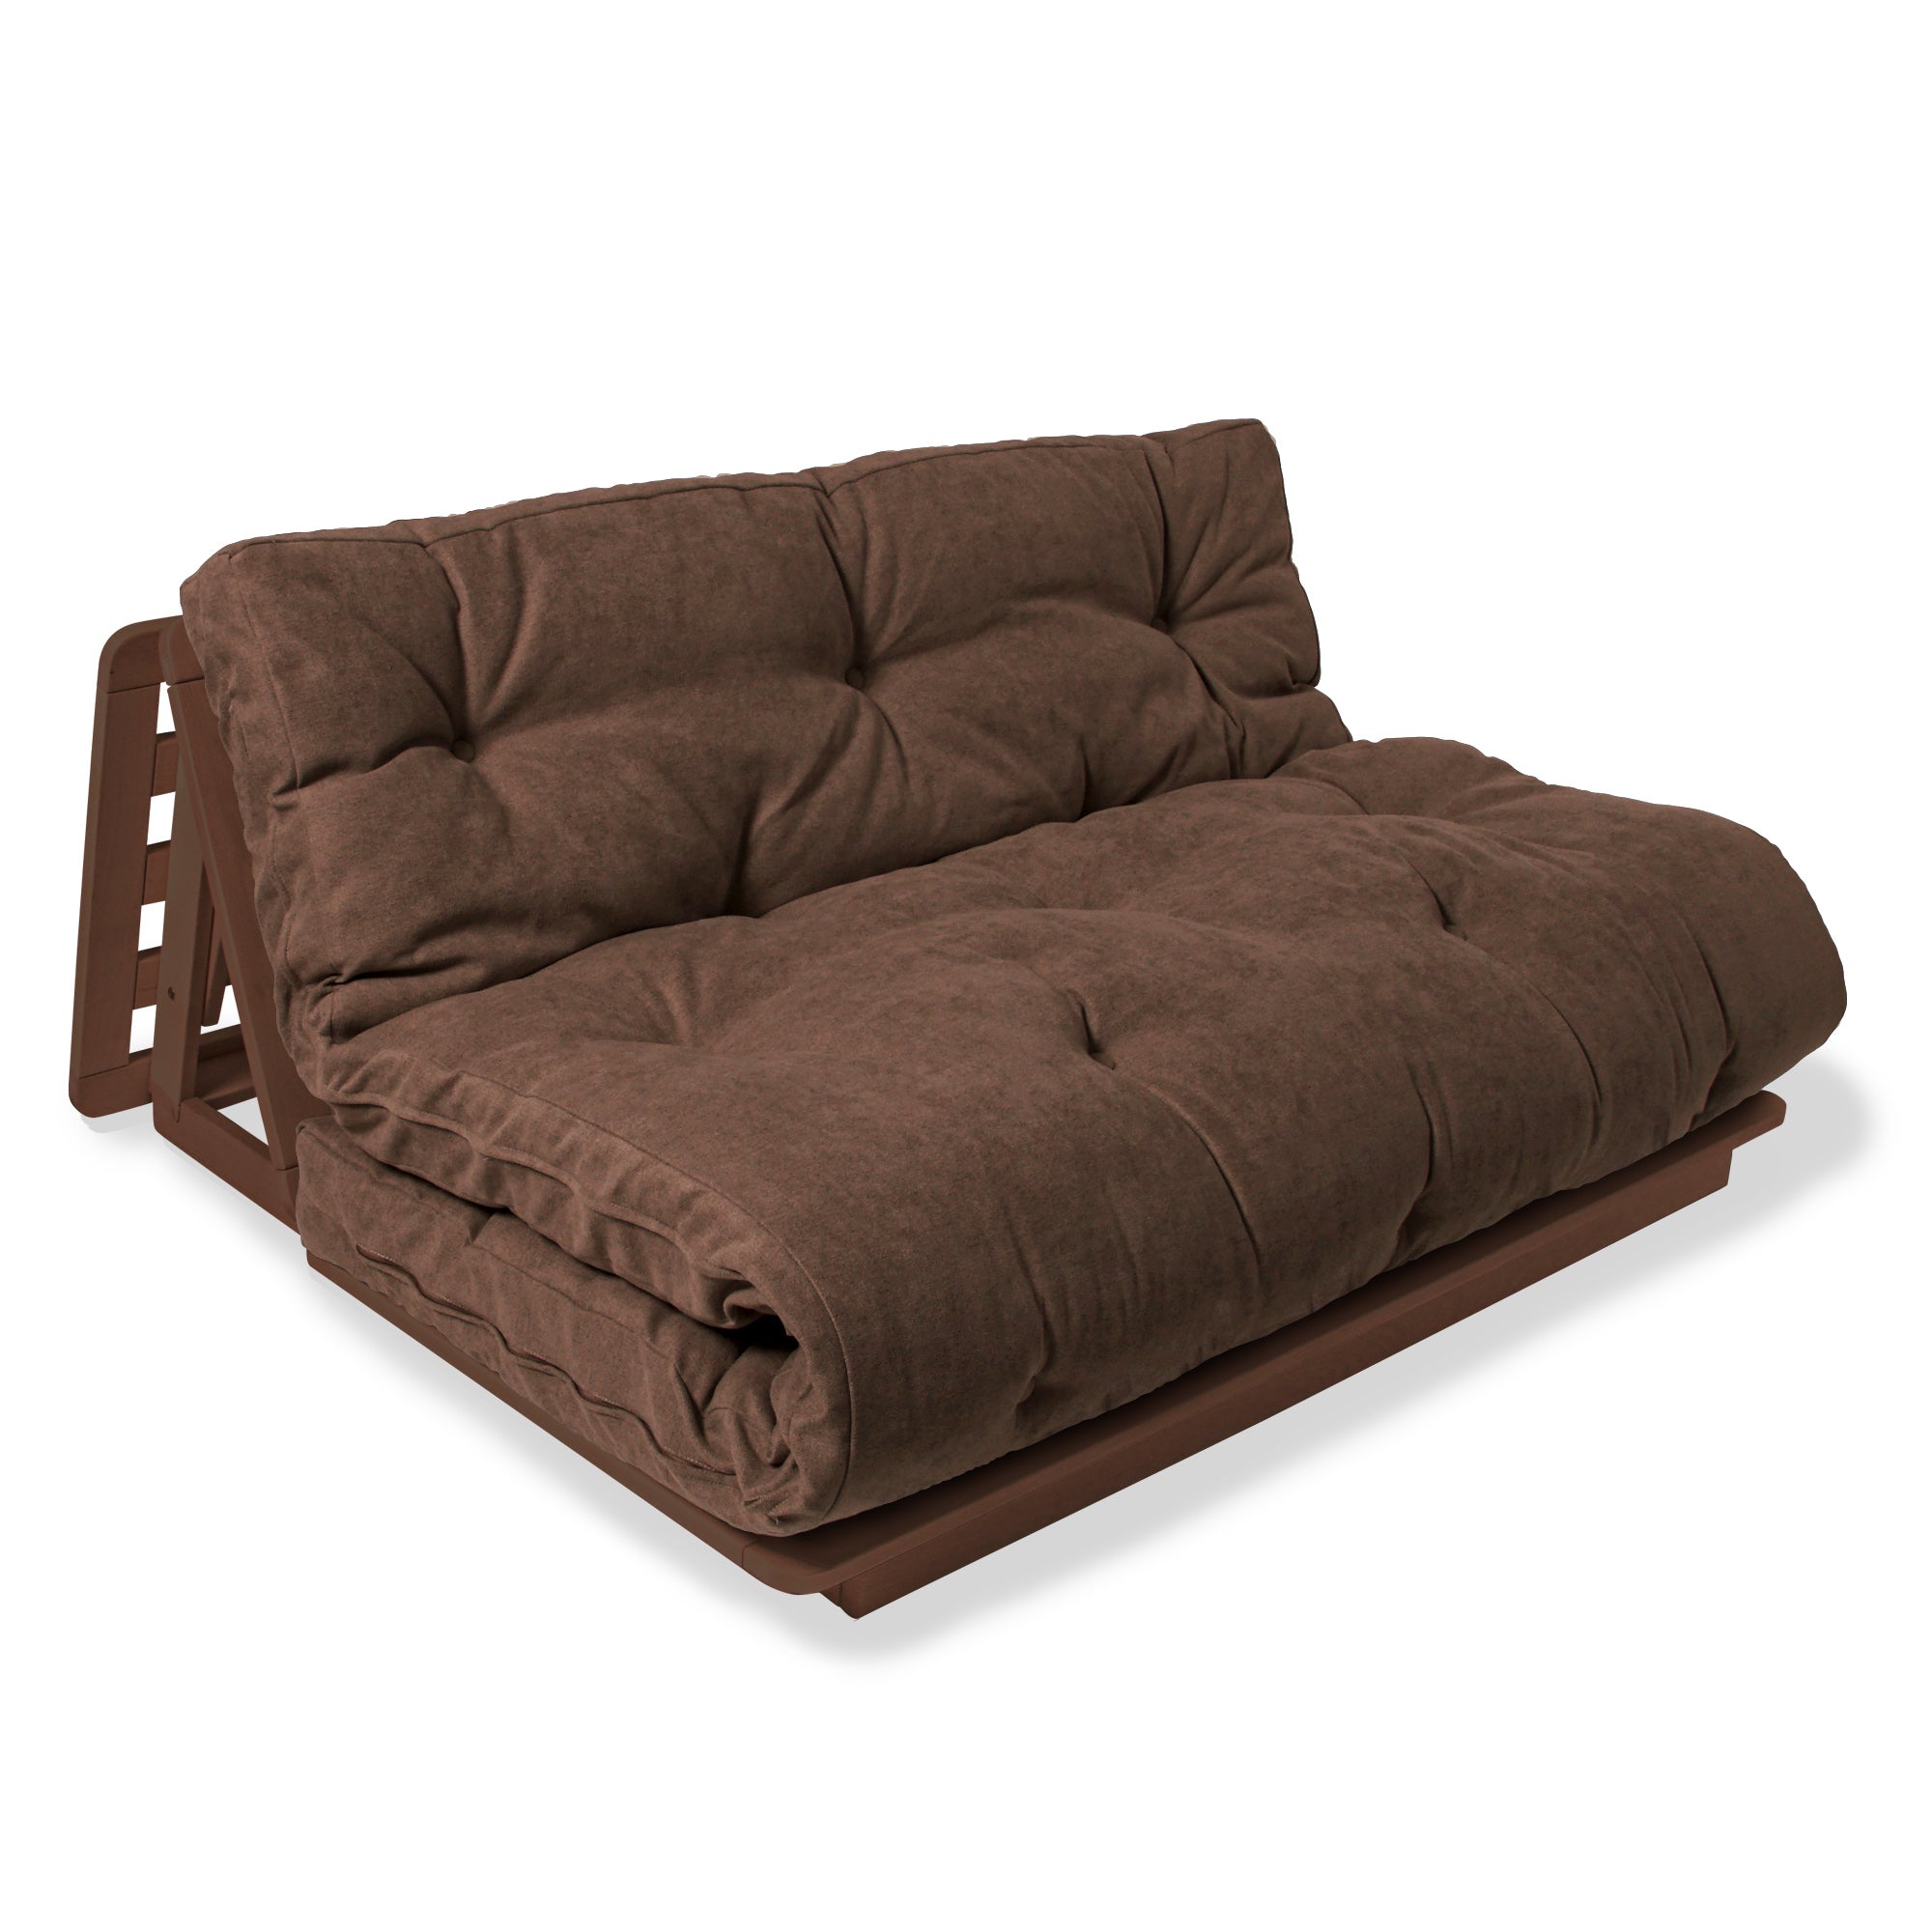 LAYTI-140 Futon Chair-walnut frame-brown fabric